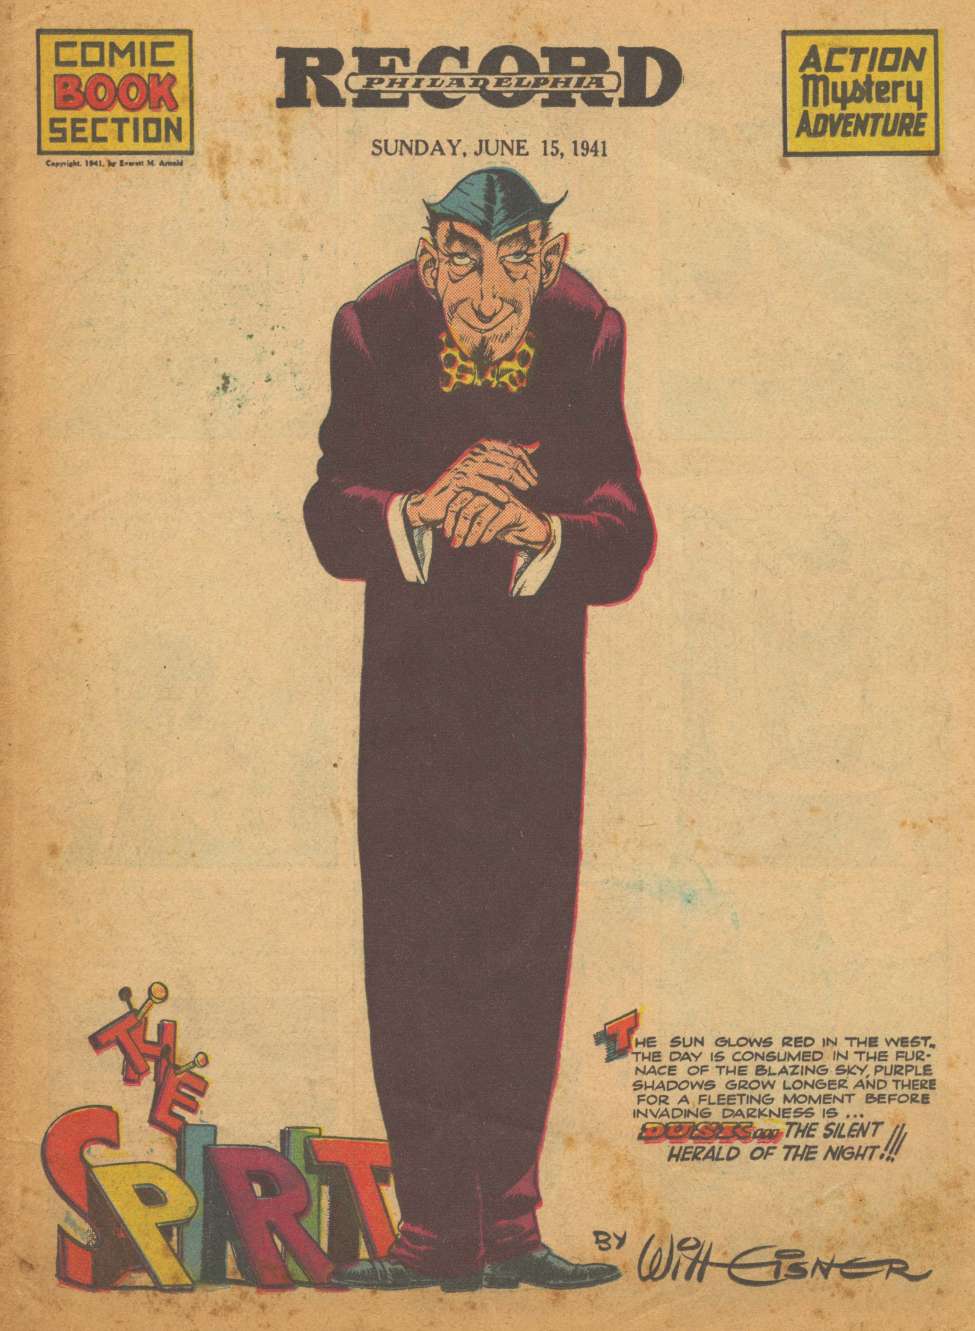 Comic Book Cover For The Spirit (1941-06-15) - Philadelphia Record - Version 2